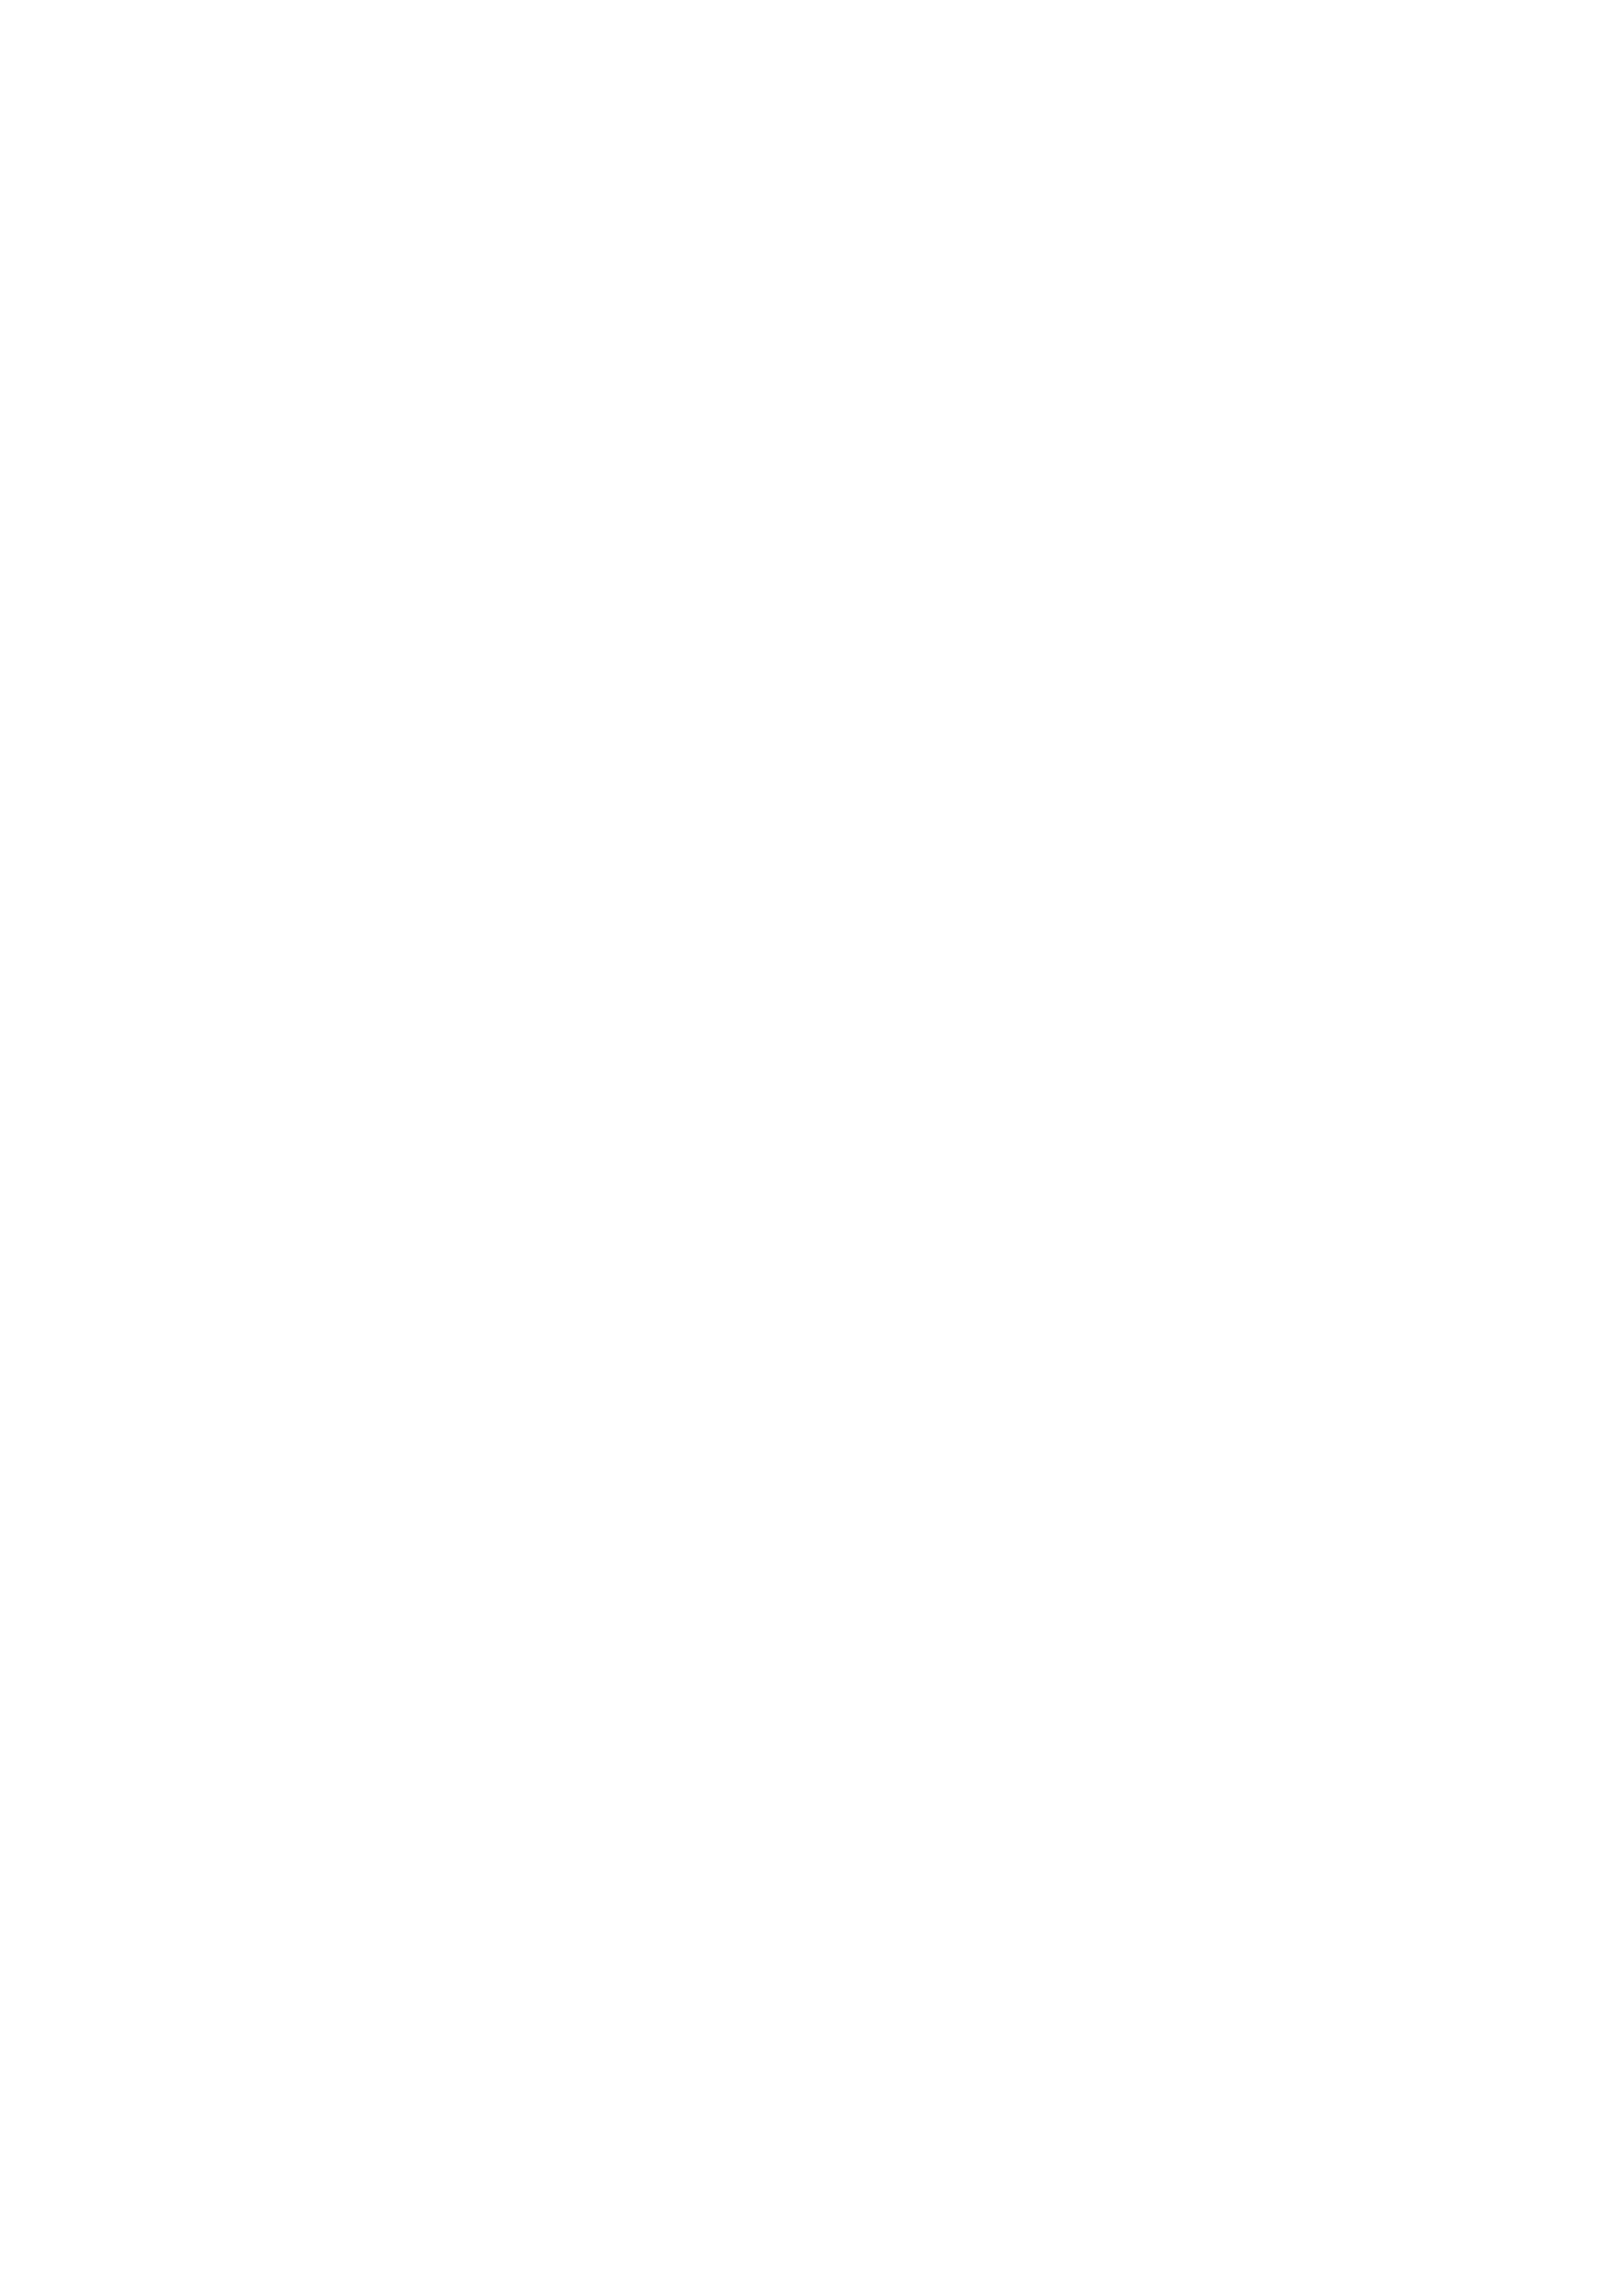 Вязаный кардиган из кидмохера на шёлке по картине Моне "Кувшинки" бренда "Таня Исаева"